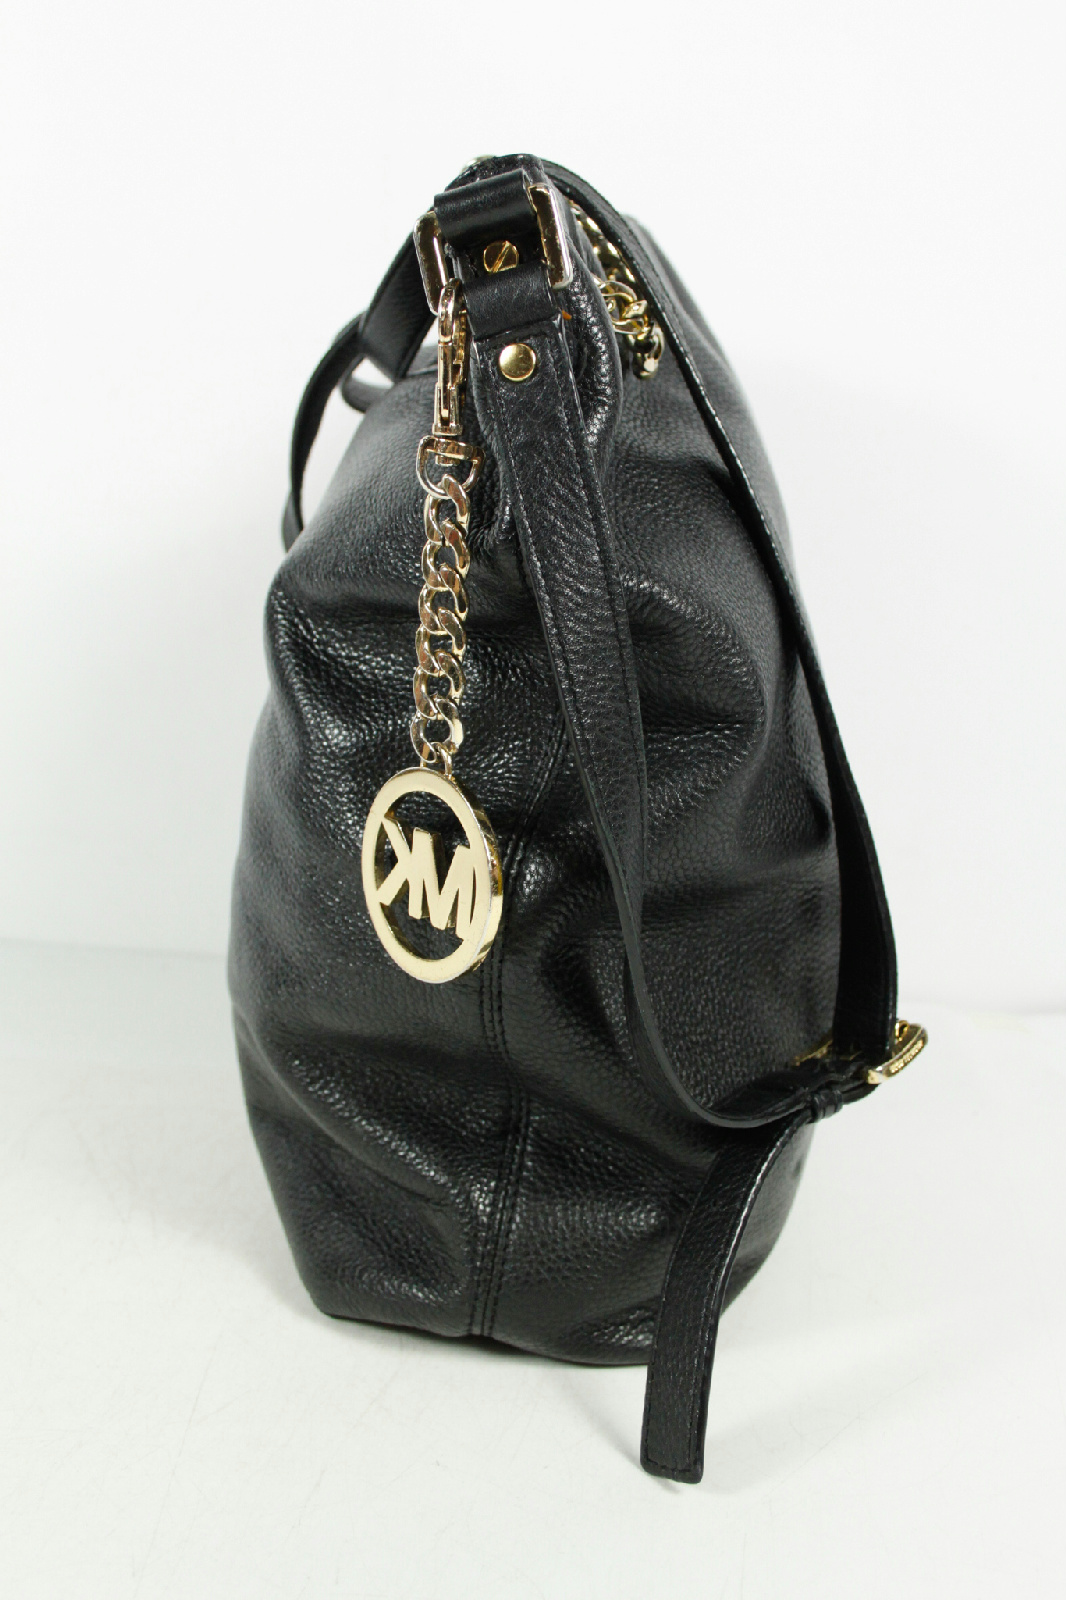 Michael Michale Kors Black Soft Pebbled Leather Metal Chain Handle Shoulder Bag | eBay